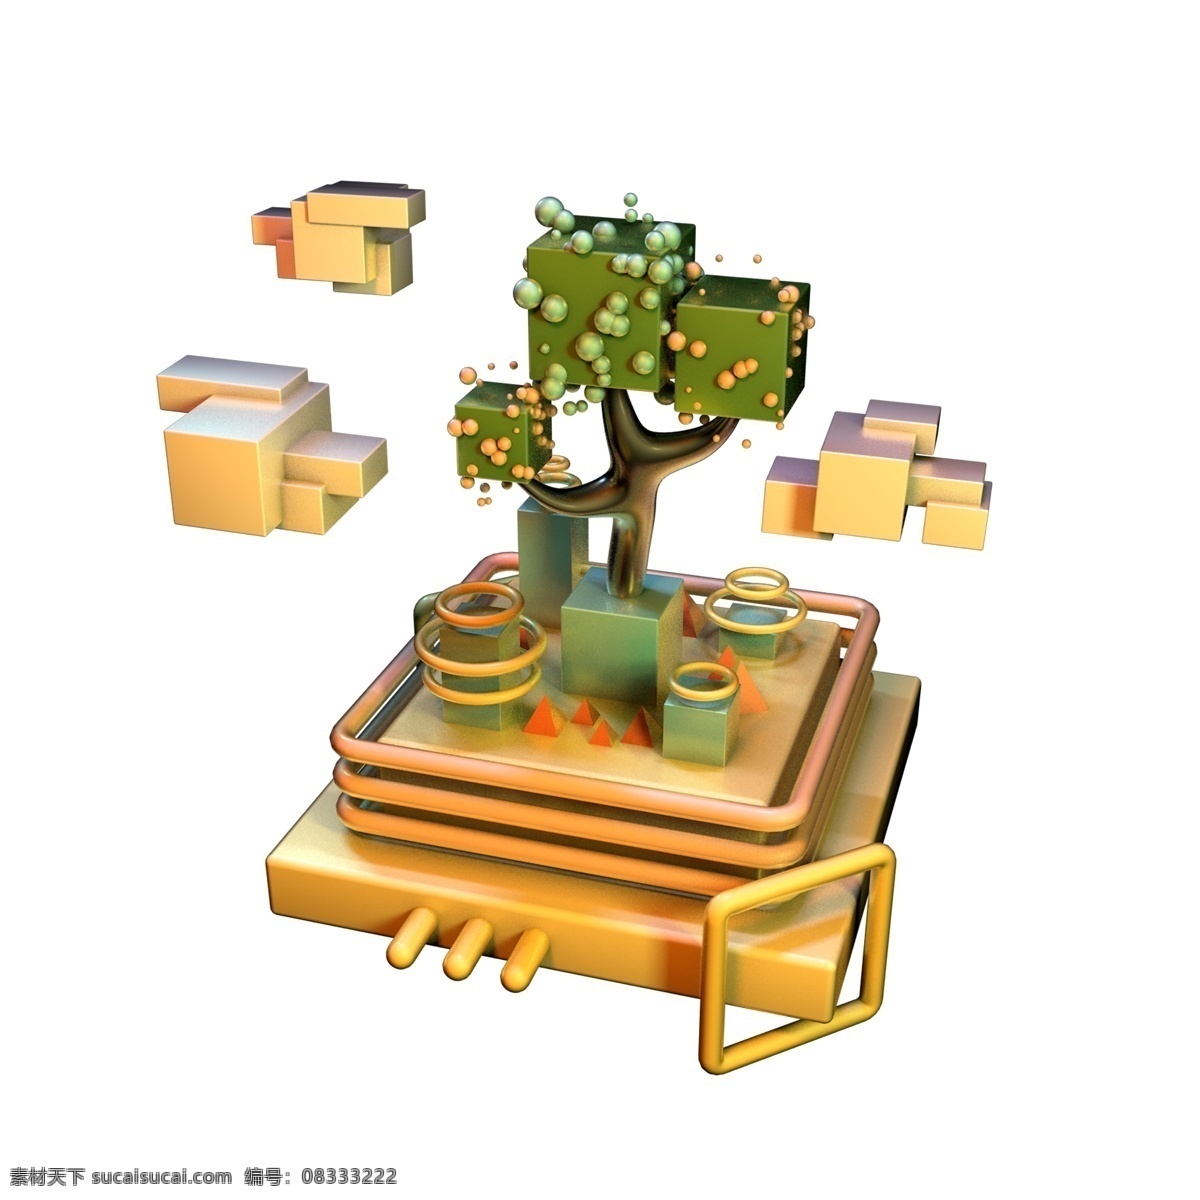 c4d 立体 质感 抽象 组合 金属质感 光泽 方块组合 电商风格 艺术抽象模型 免抠图 方块堆叠 层次 抽象树